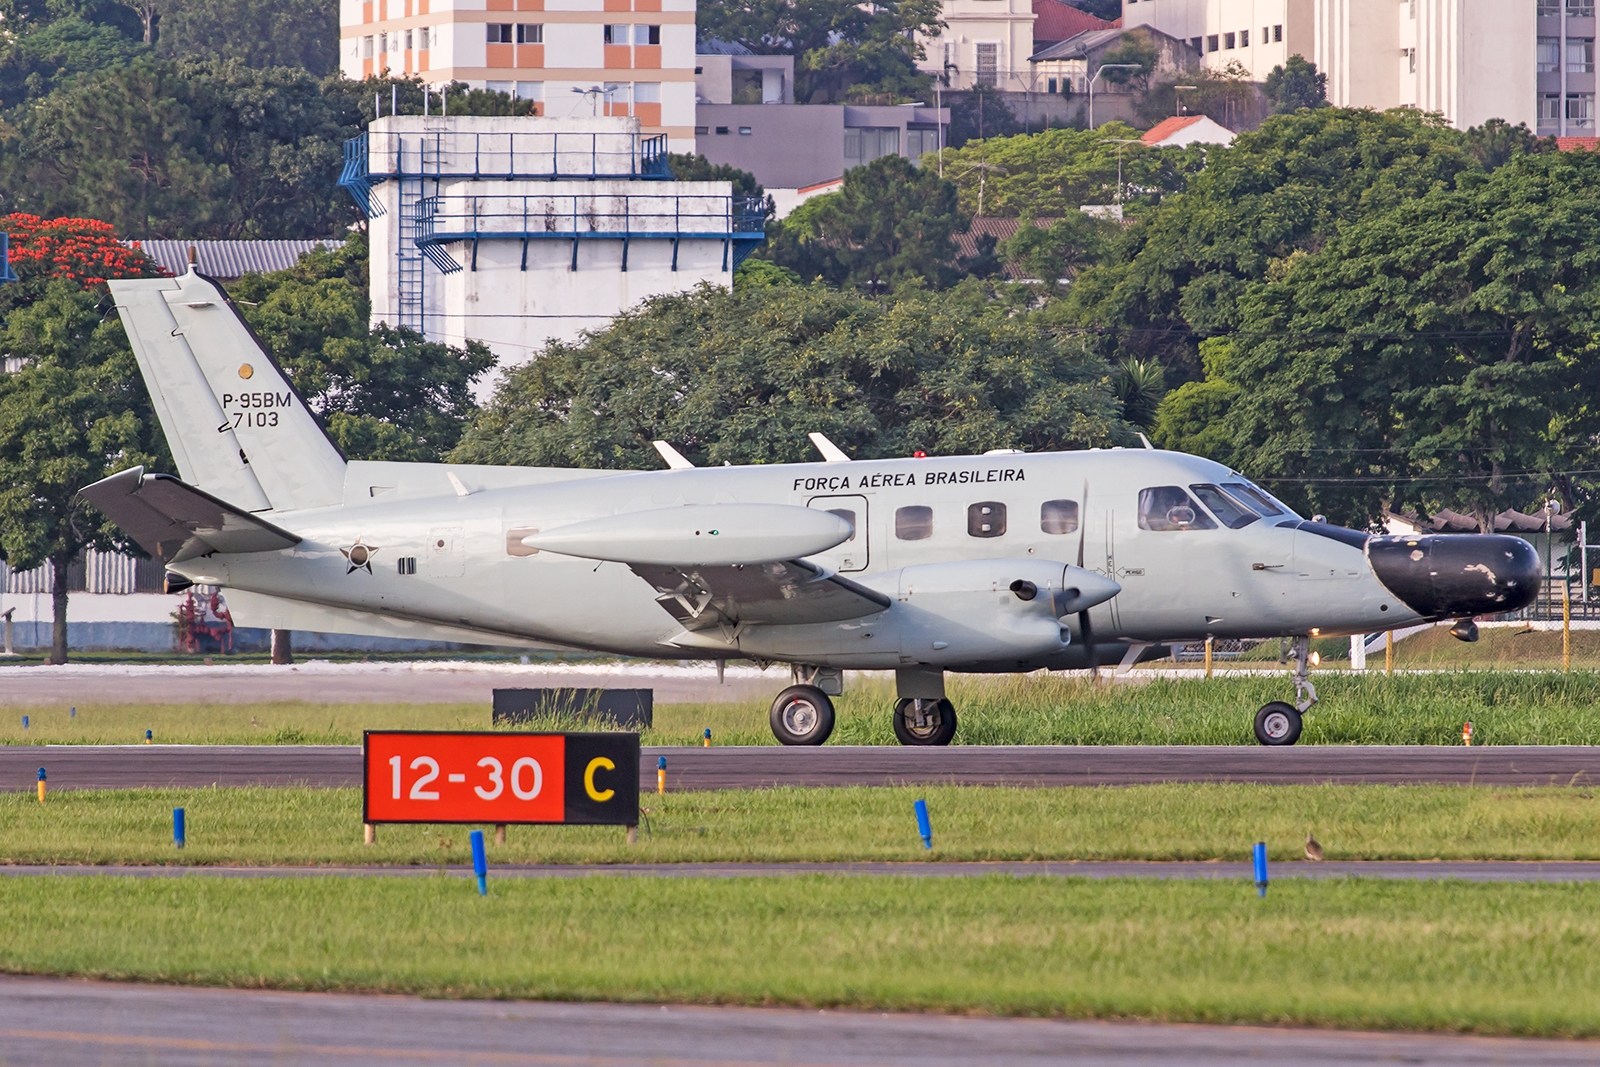 FAB7103 - Embraer P-95 Bandeirulha